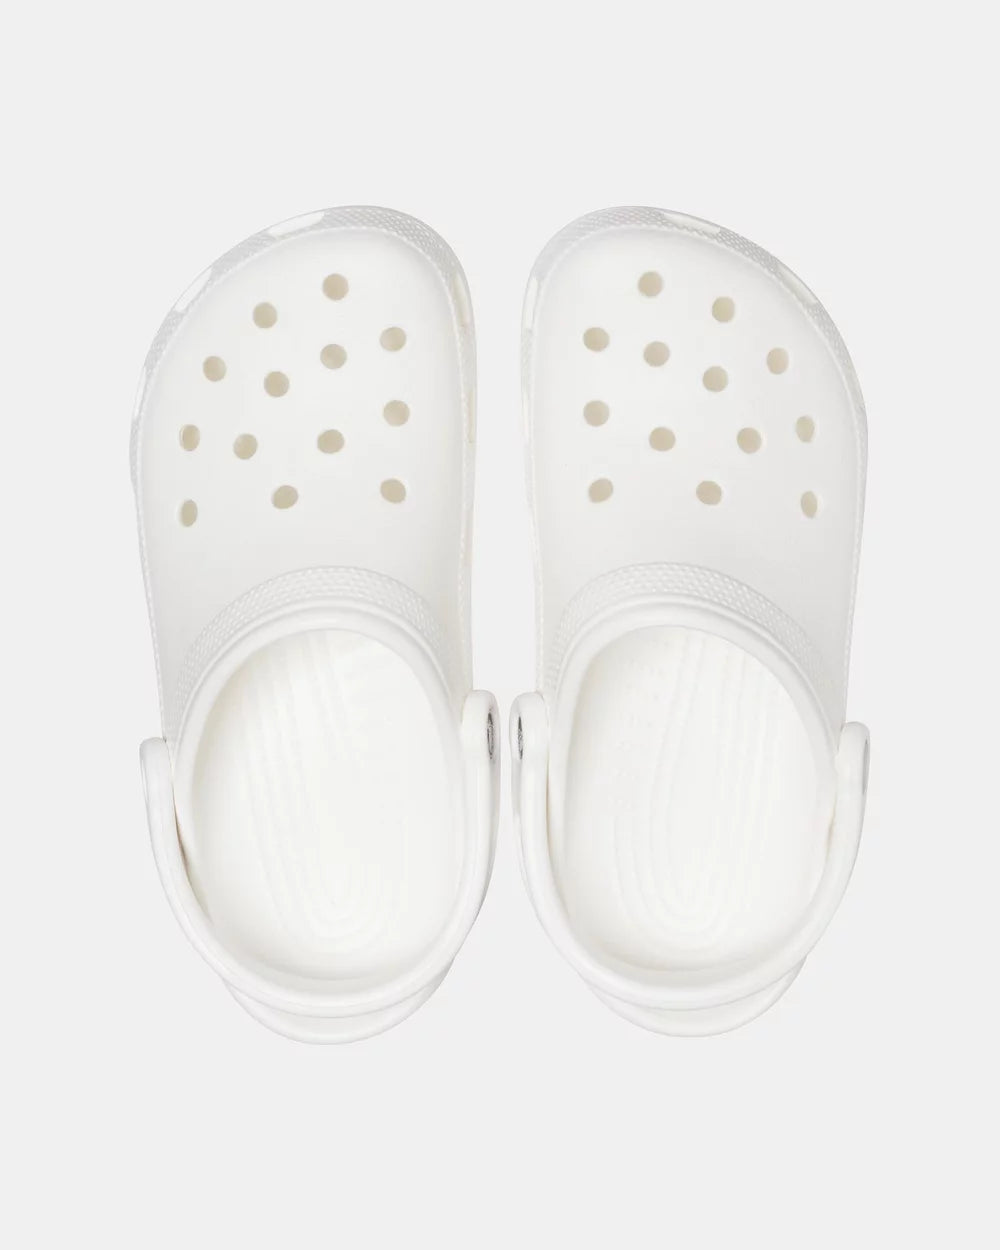 Crocs Classic White Waterproof Shoes Comfy 